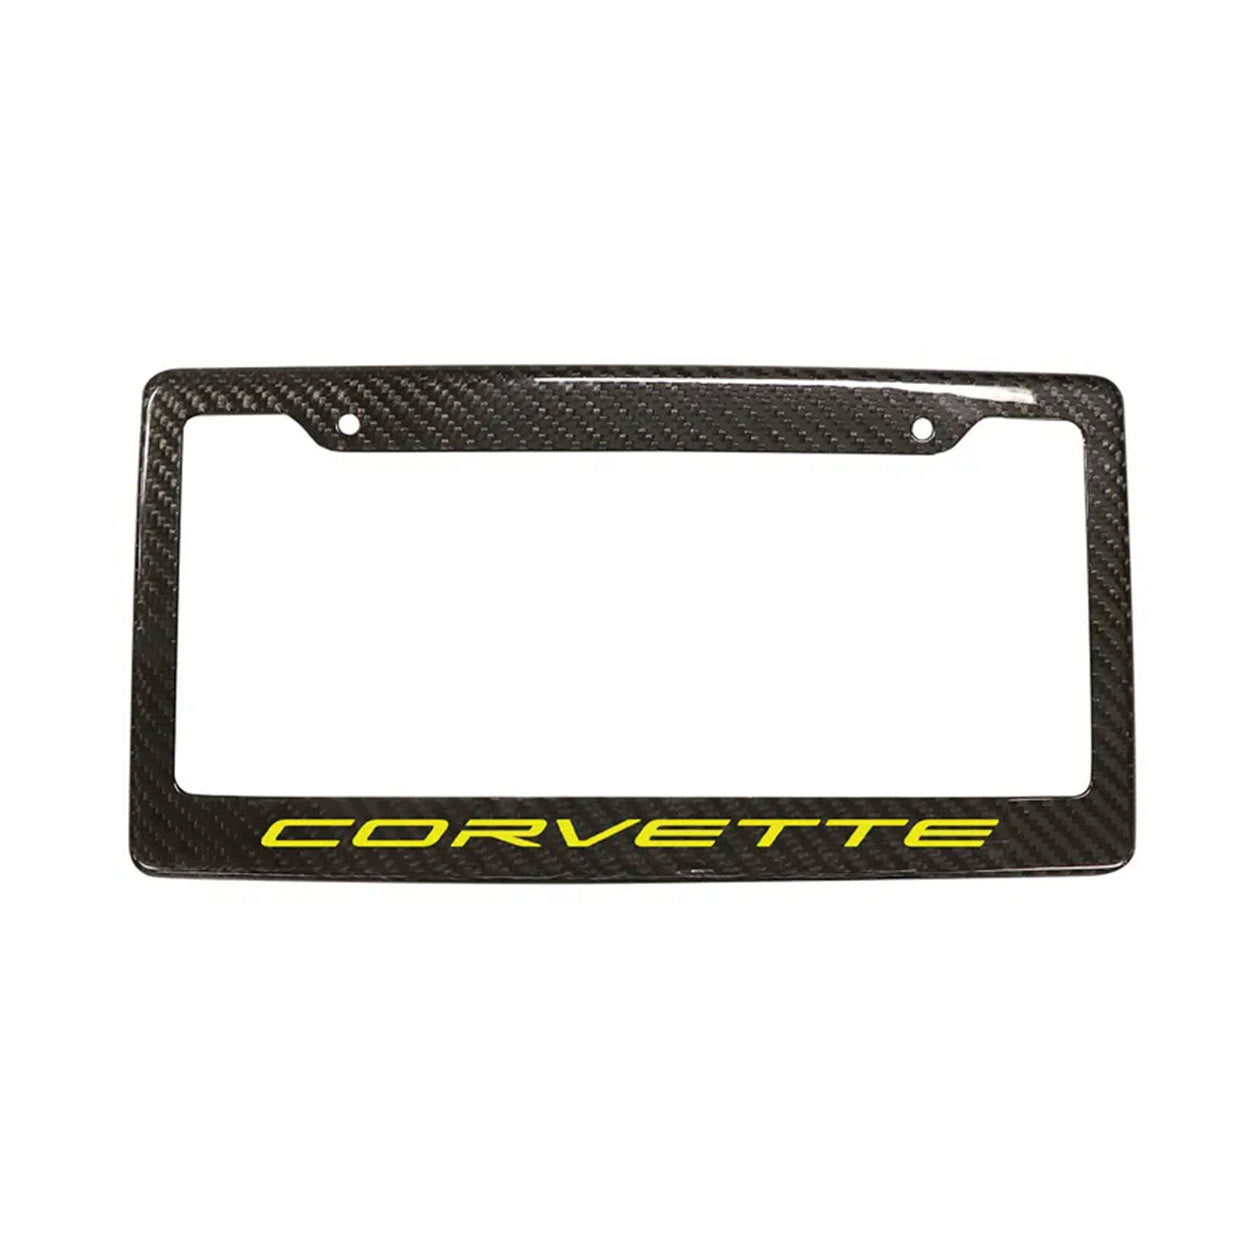 C8 Corvette License Plate Frame - Carbon Fiber